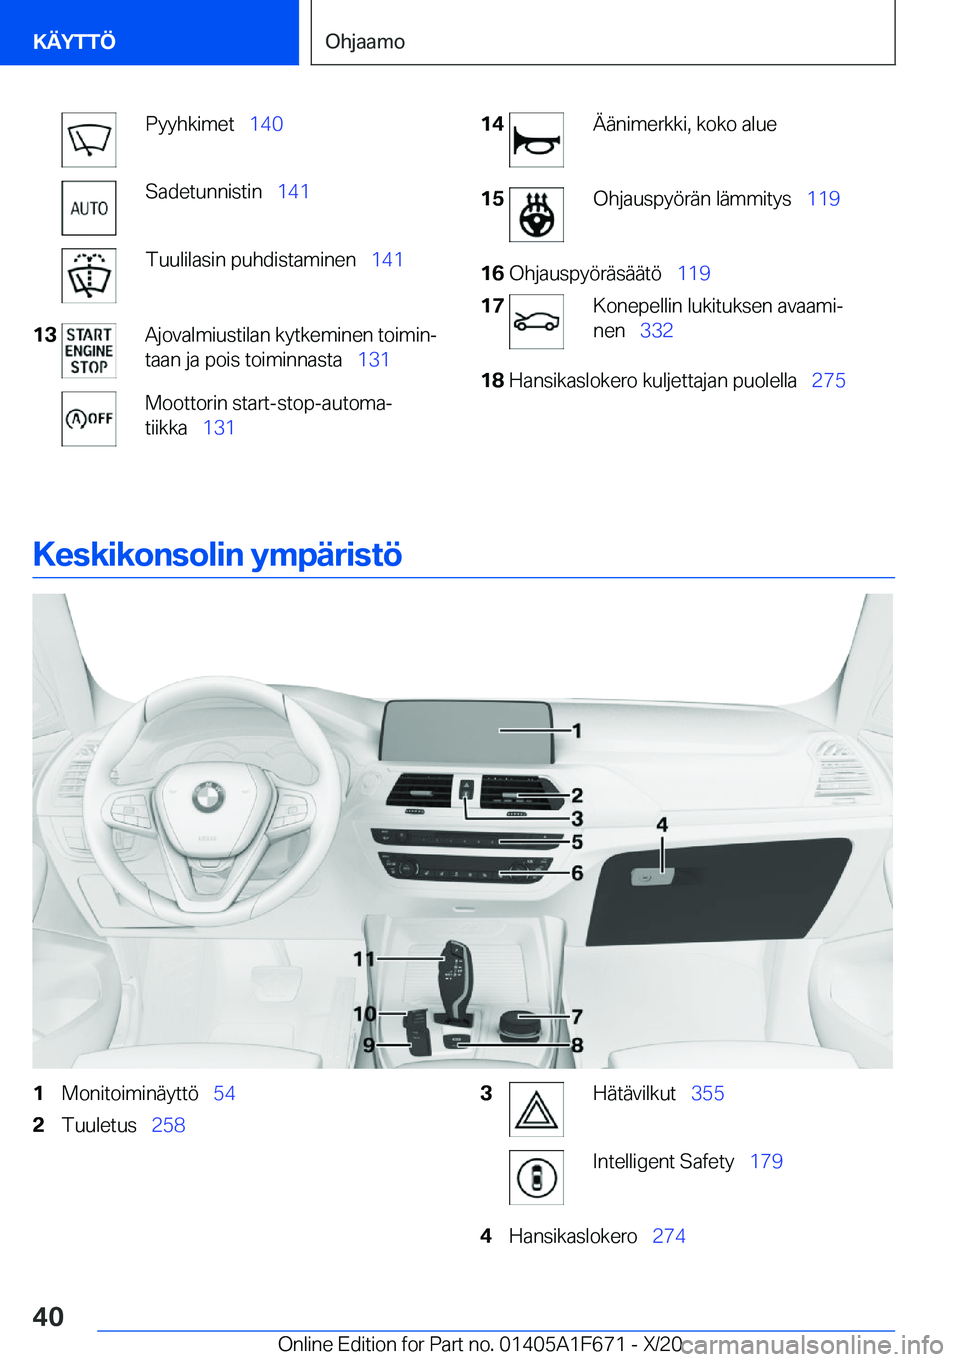 BMW X4 2021  Omistajan Käsikirja (in Finnish) �P�y�y�h�k�i�m�e�t\_�1�4�0�S�a�d�e�t�u�n�n�i�s�t�i�n\_ �1�4�1�T�u�u�l�i�l�a�s�i�n��p�u�h�d�i�s�t�a�m�i�n�e�n\_ �1�4�1�1�3�A�j�o�v�a�l�m�i�u�s�t�i�l�a�n��k�y�t�k�e�m�i�n�e�n��t�o�i�m�i�nj
�t�